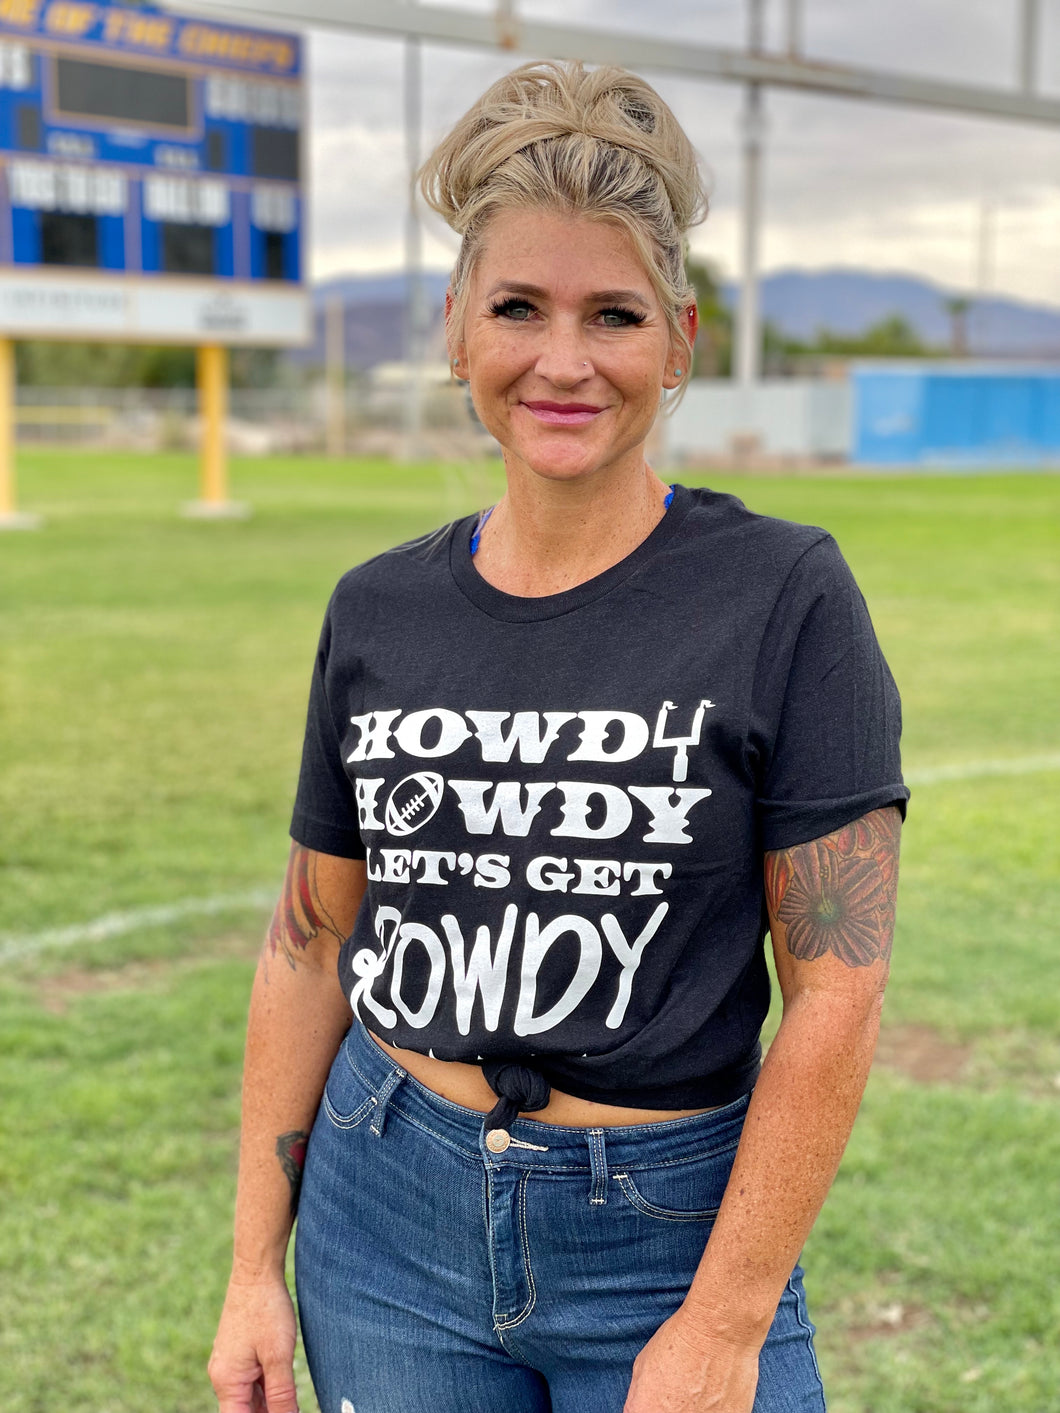 Howdy Rowdy shirt